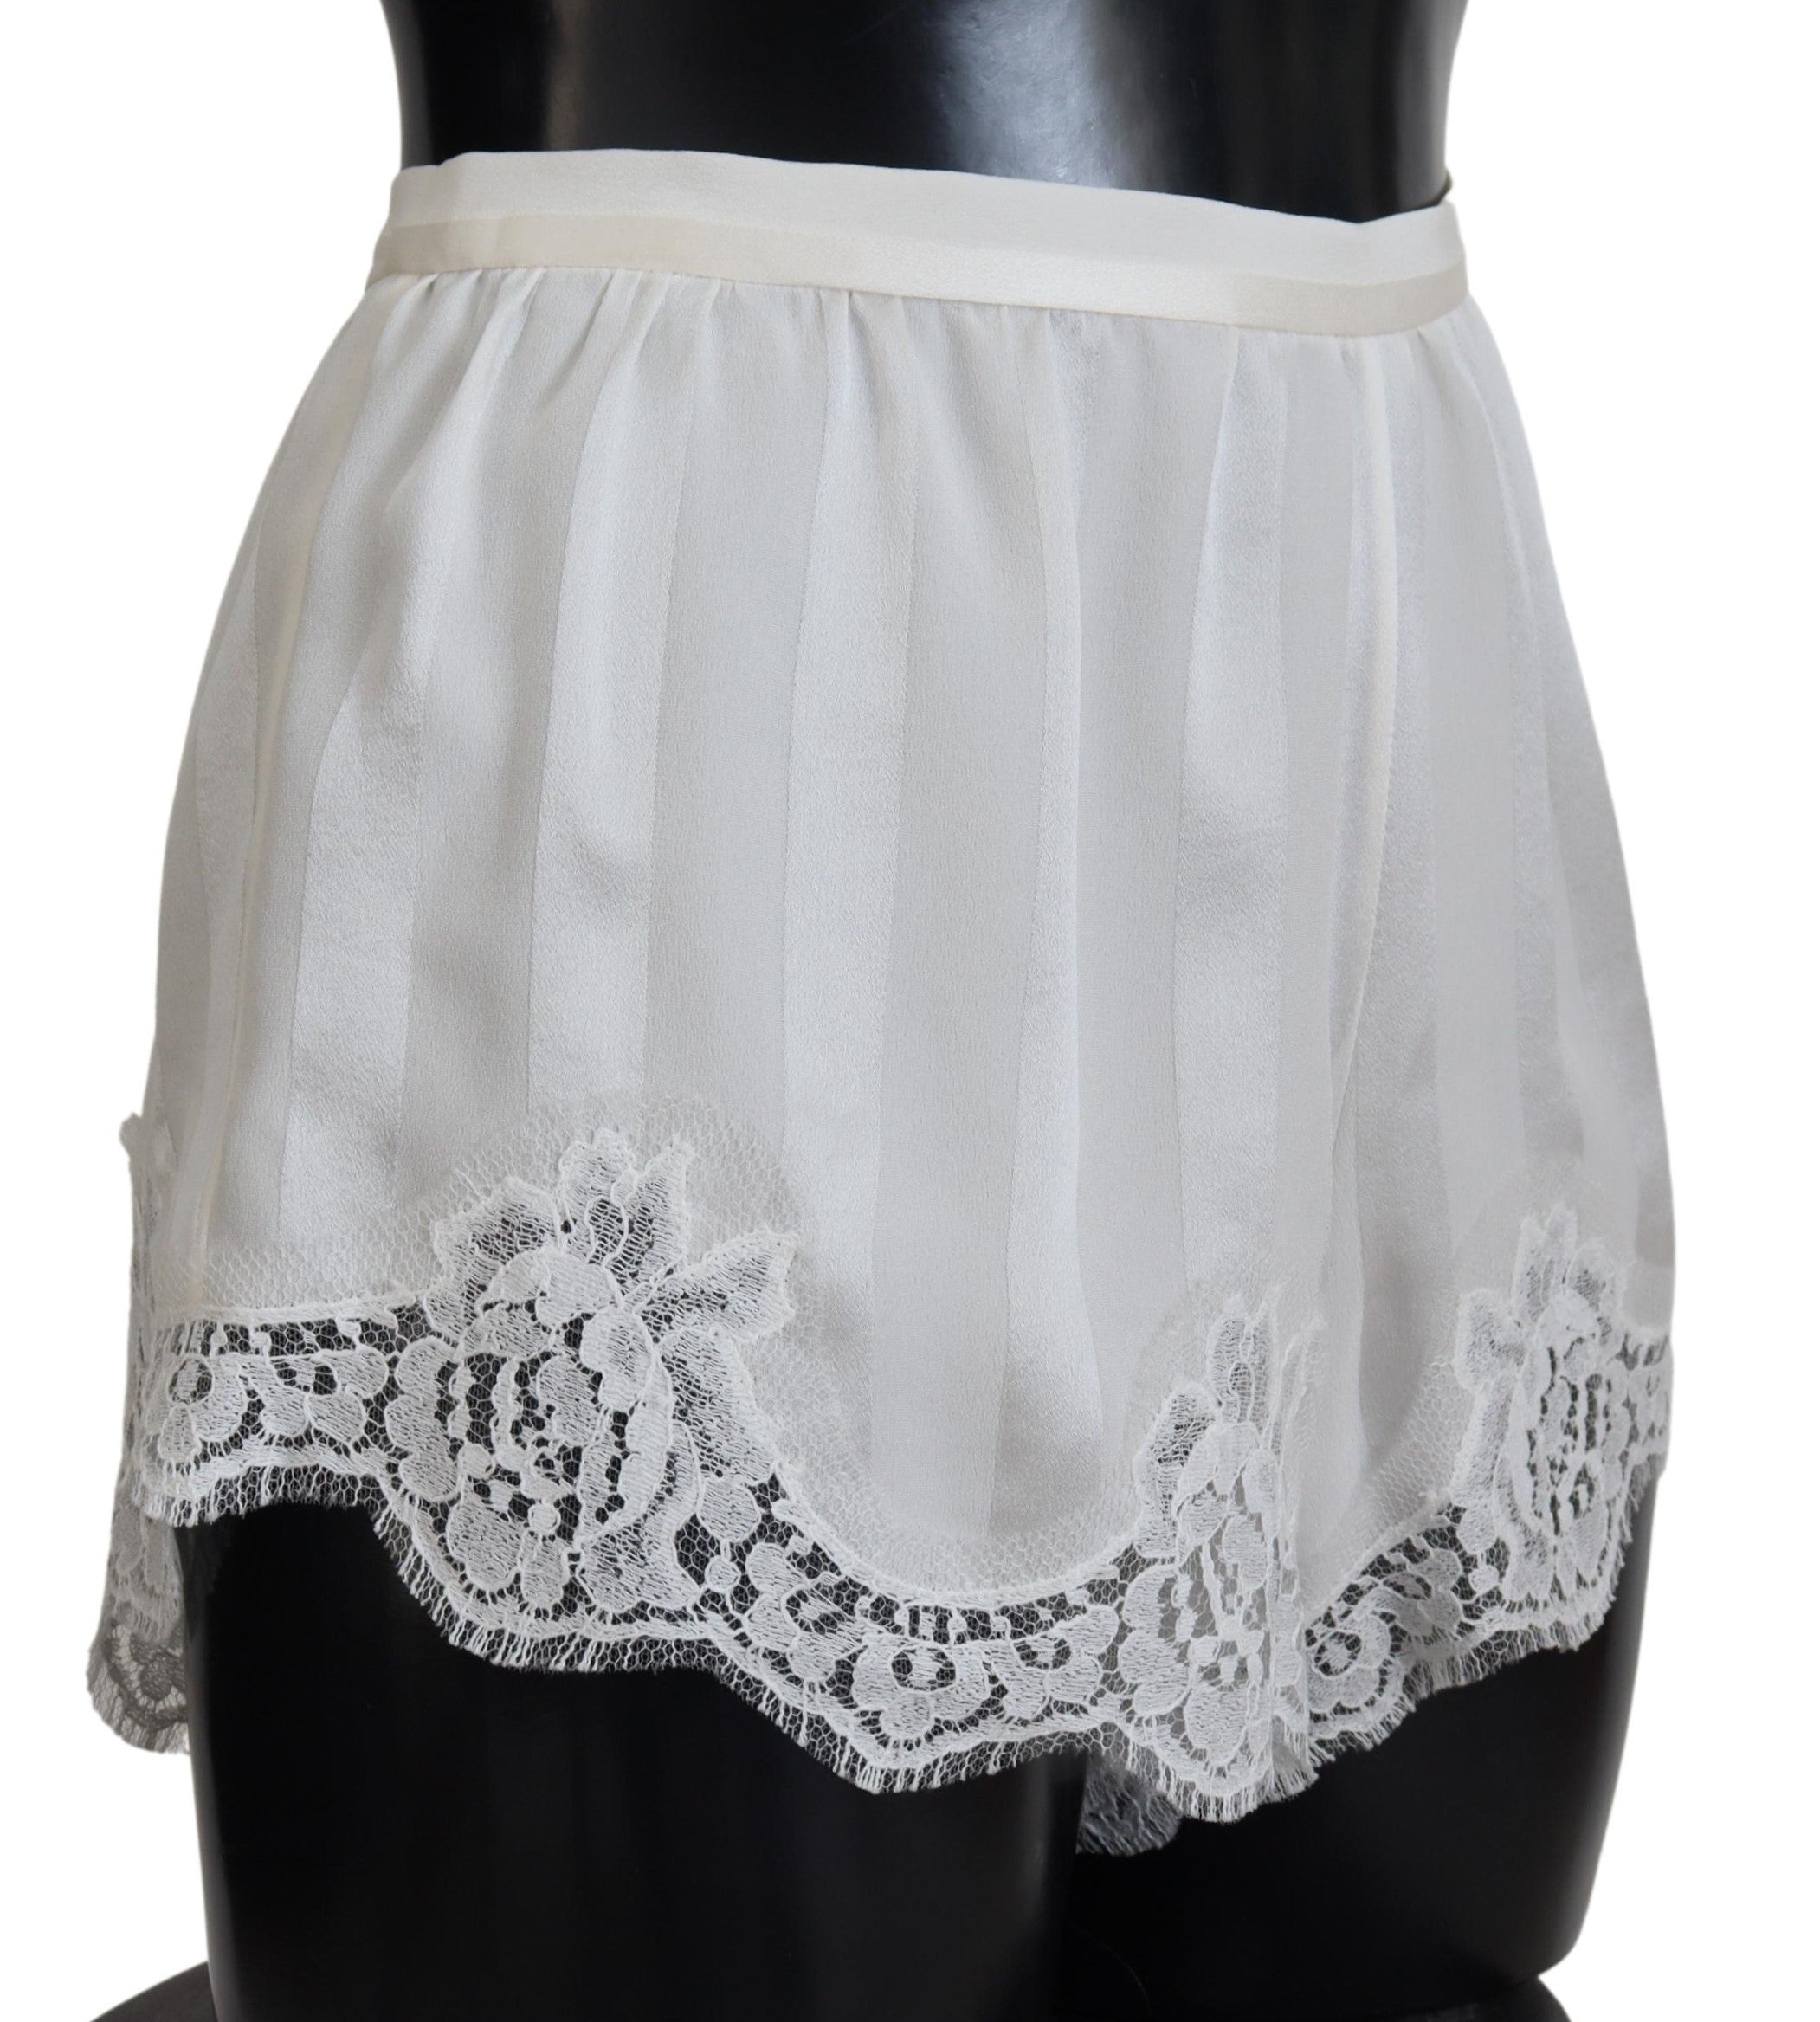 Dolce & Gabbana Elegant White Lace Lingerie Shorts